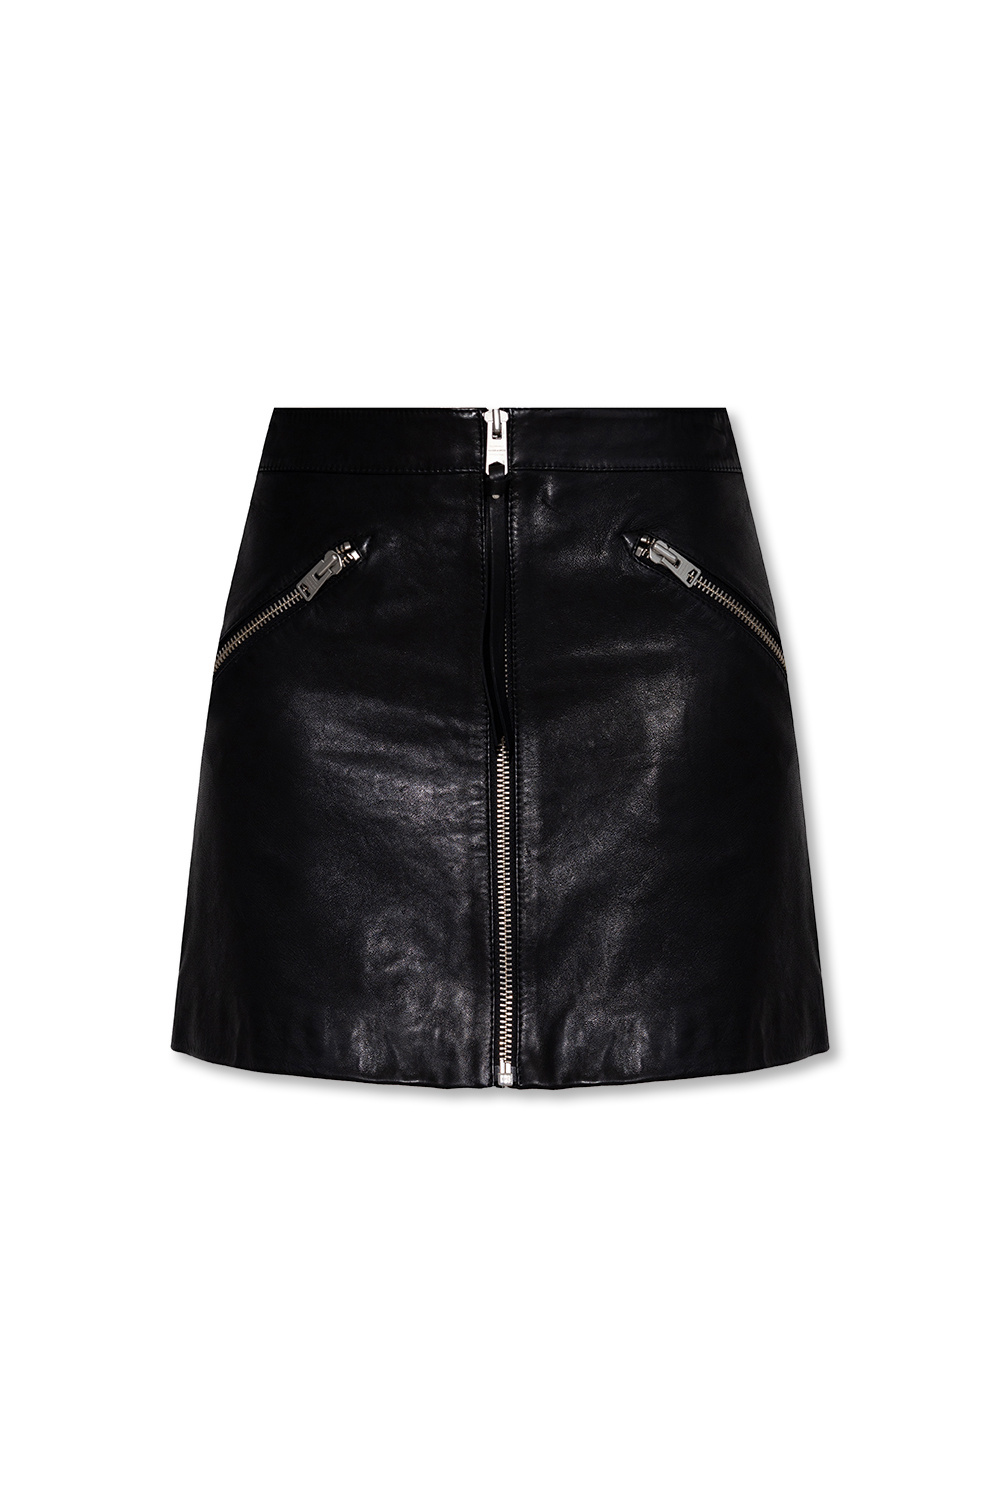 ‘Piper’ short leather skirt AllSaints - Vitkac Australia